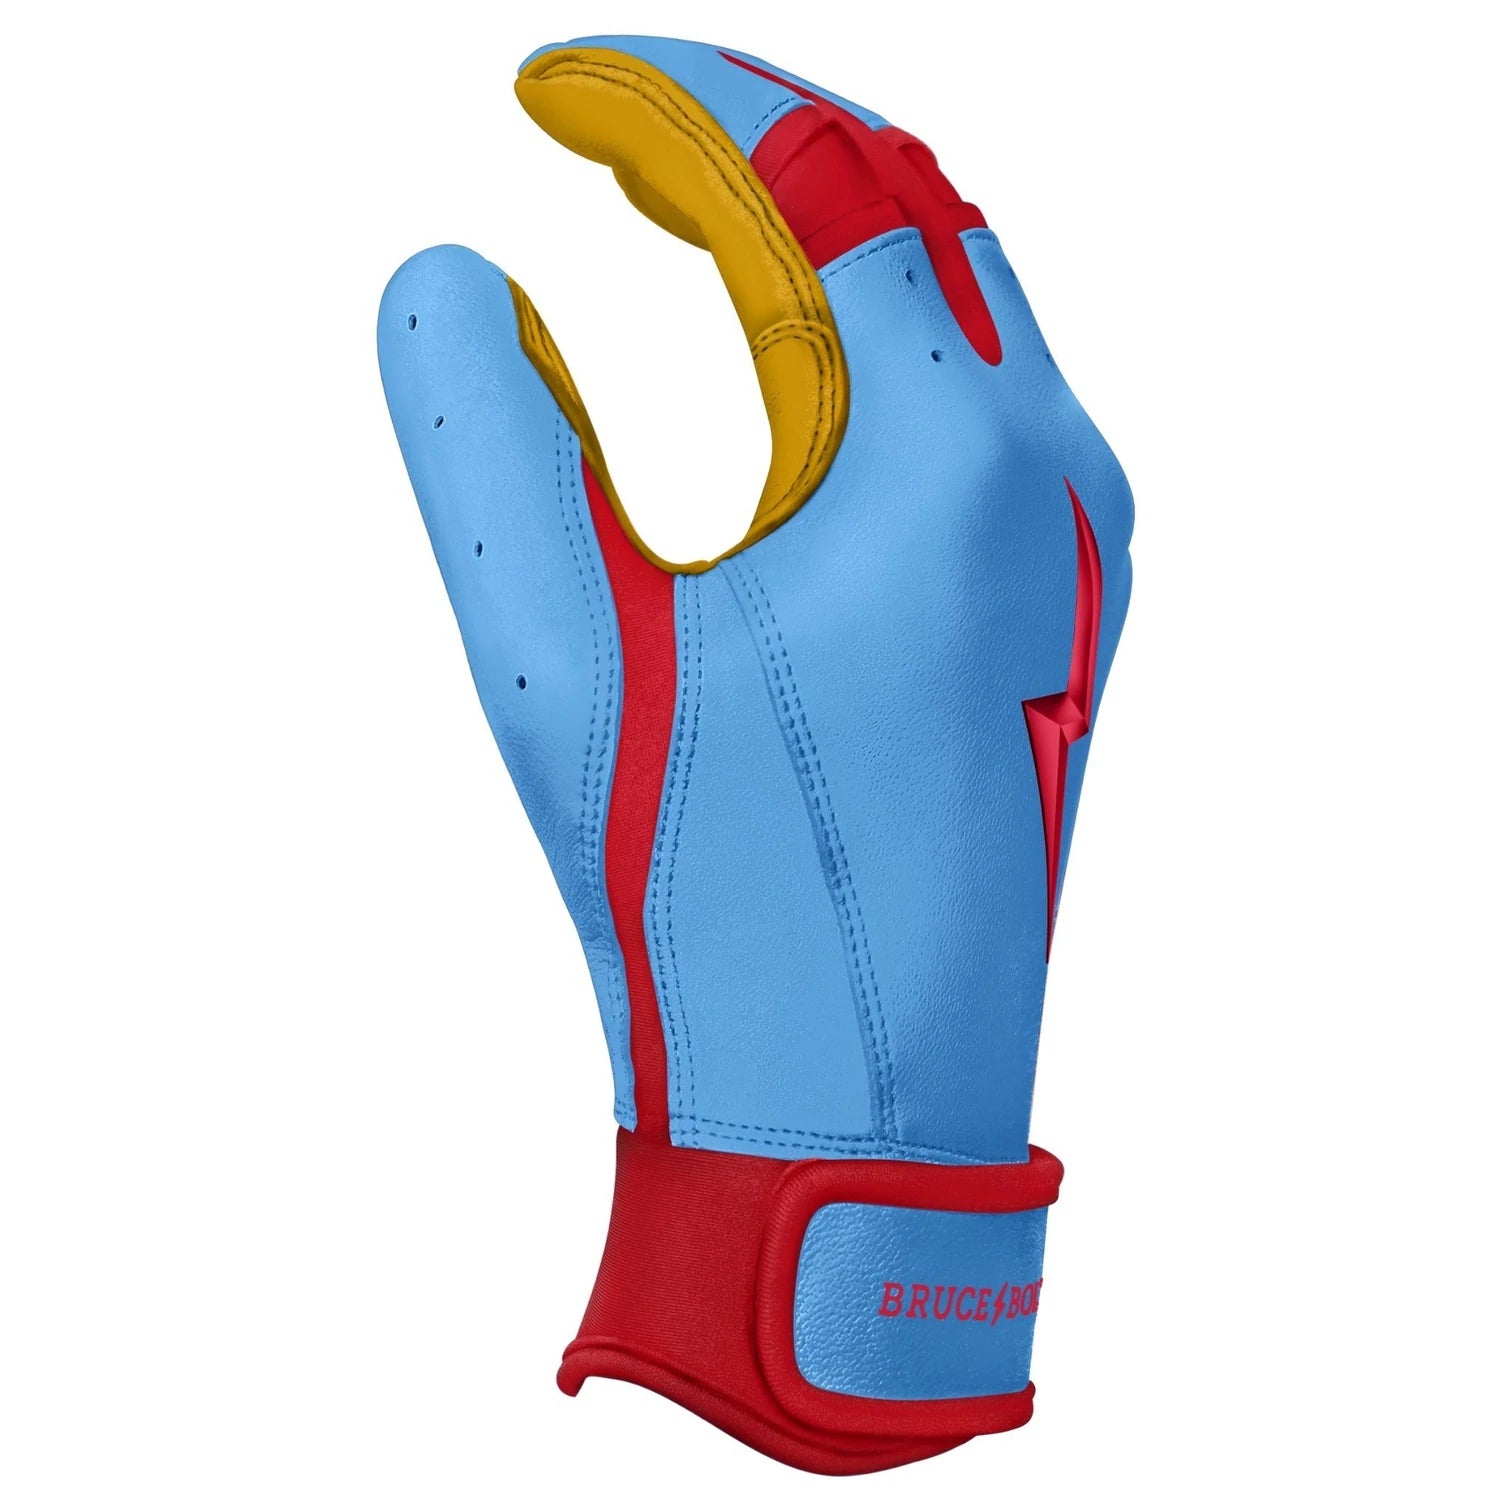 Bruce Bolt - BADER Series Youth Short Cuff Batting Gloves | BABY BLUE